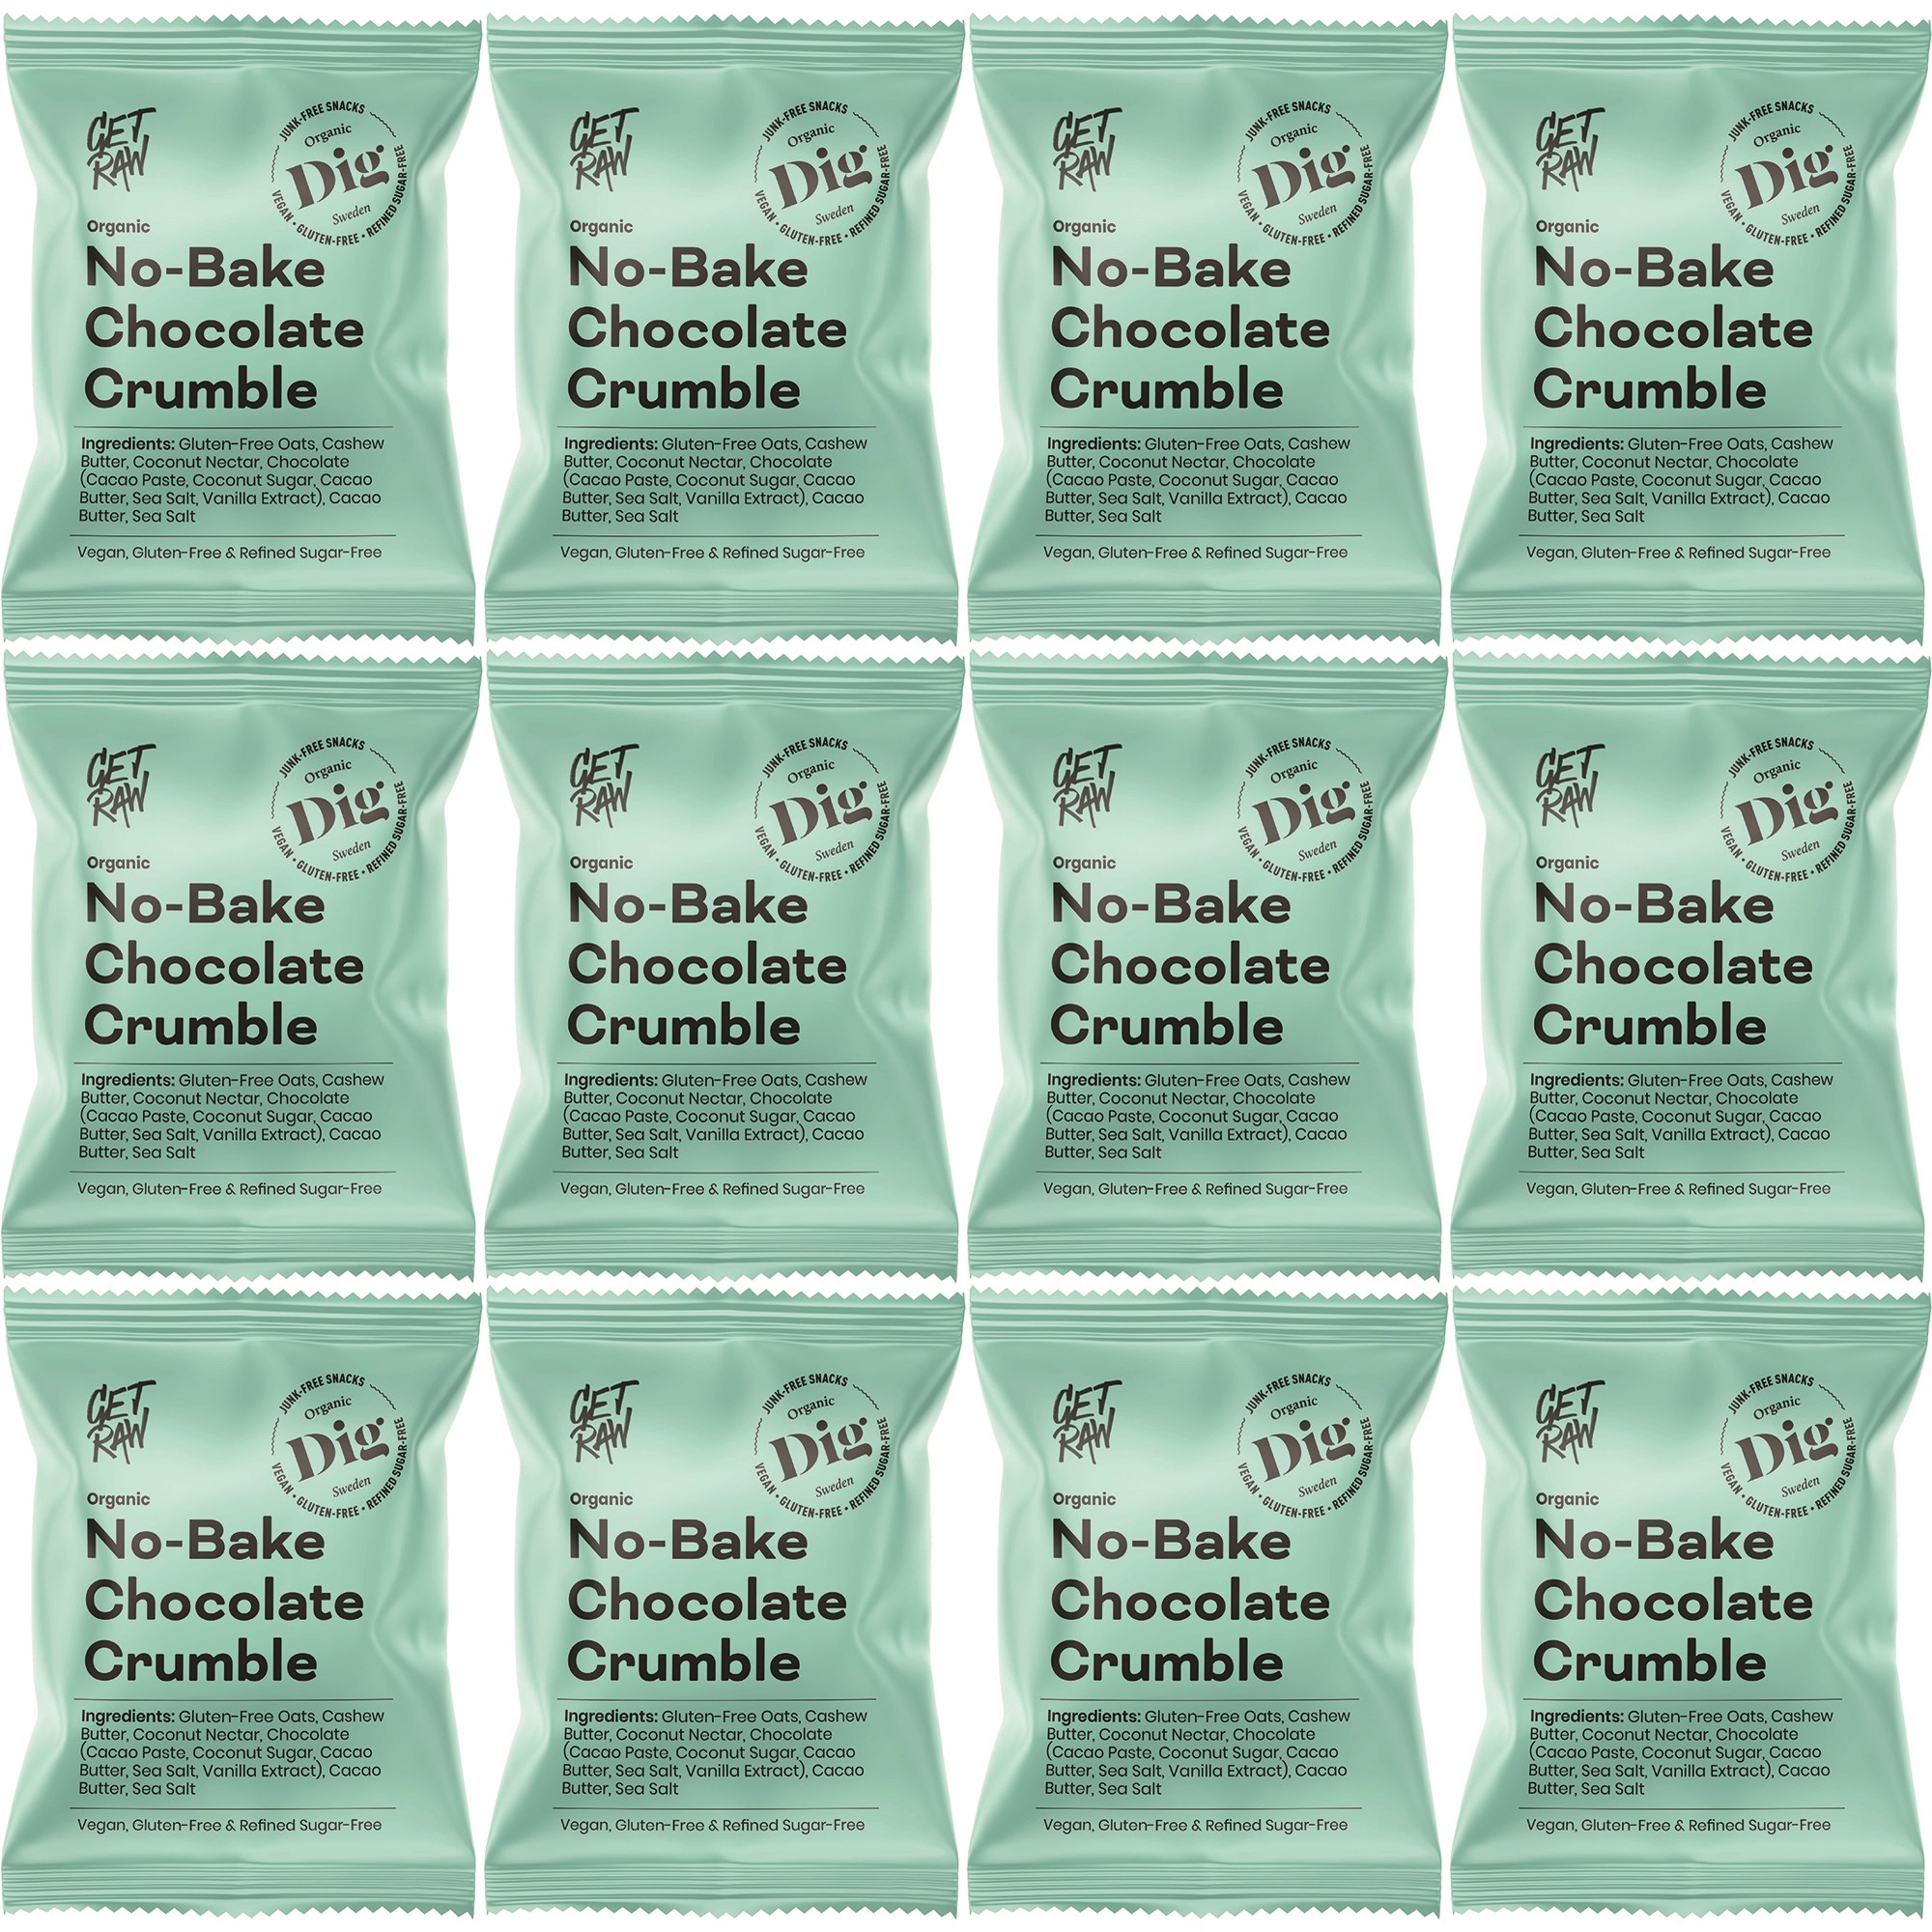 Dig GET RAW Organic No-Bake Chocolate Crumble 12 x 35g